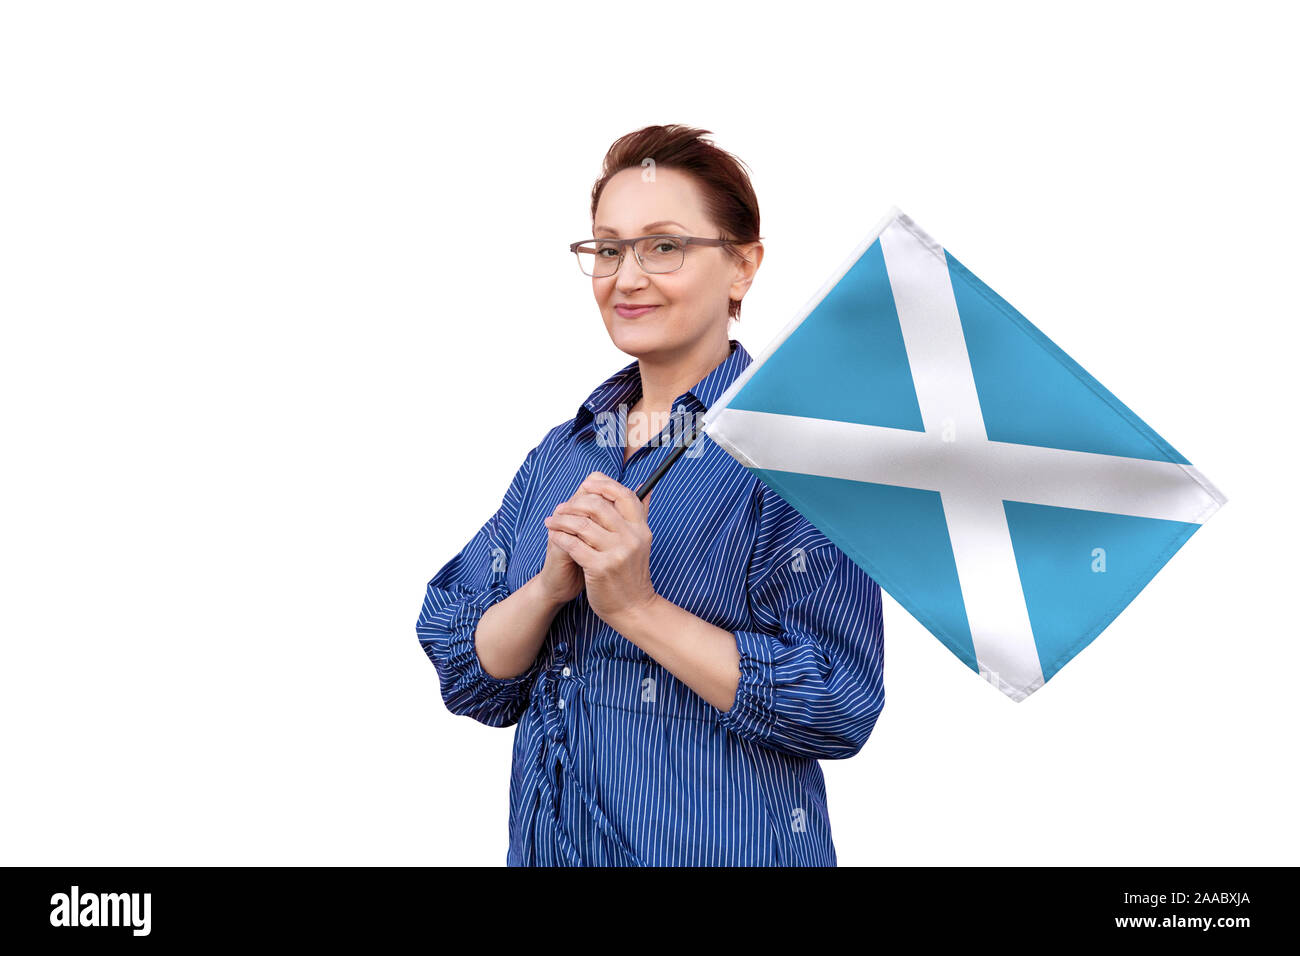 Scotland flag. Woman holding Scottish flag. Nice portrait of middle aged lady 40 50 years old holding a large flag isolated on white background. Stock Photo